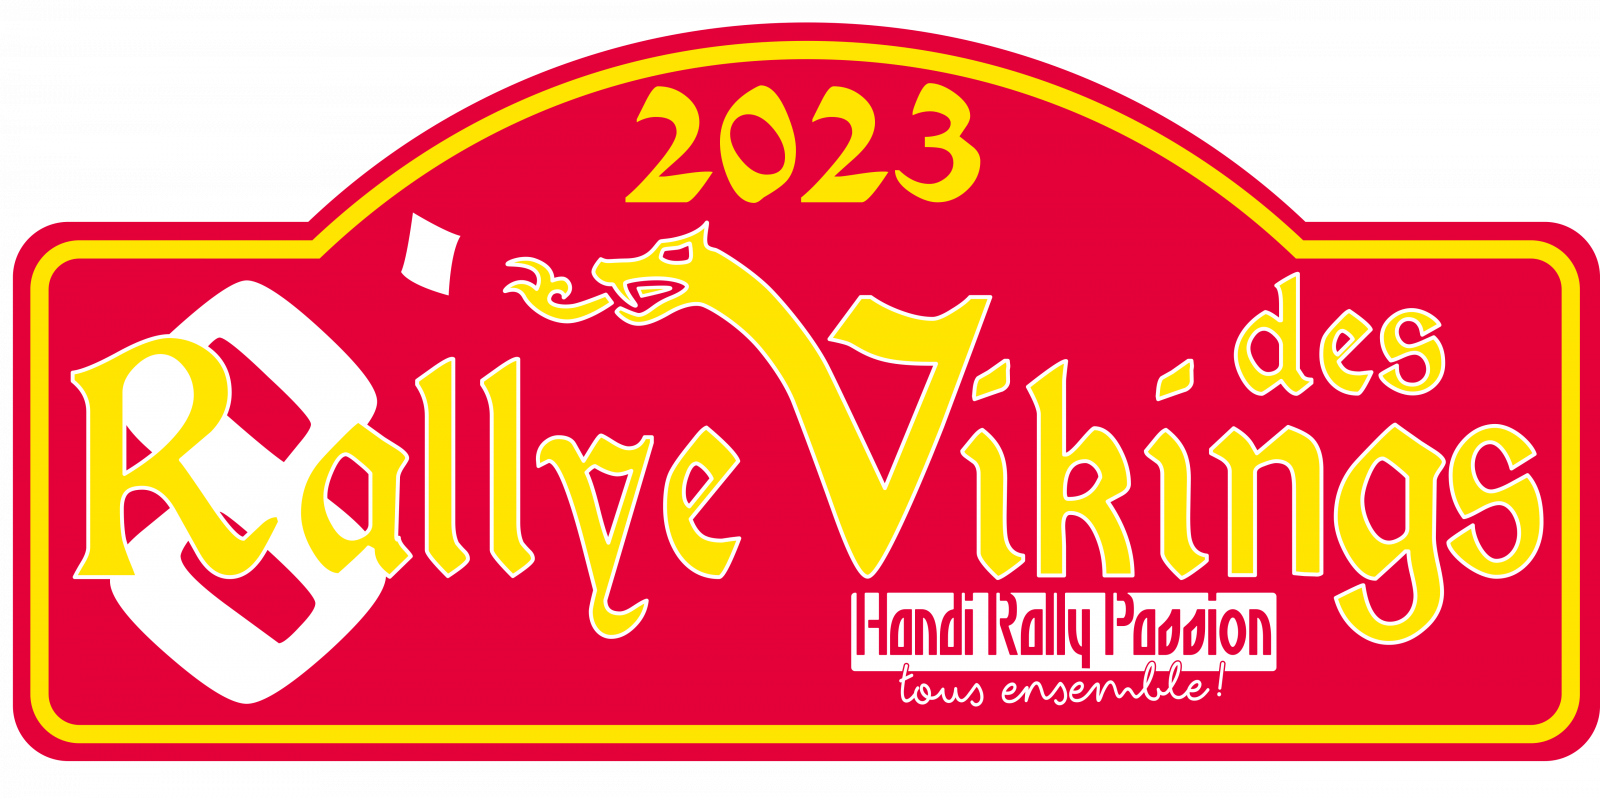 Rallye des Viking_le 3 juin 2023